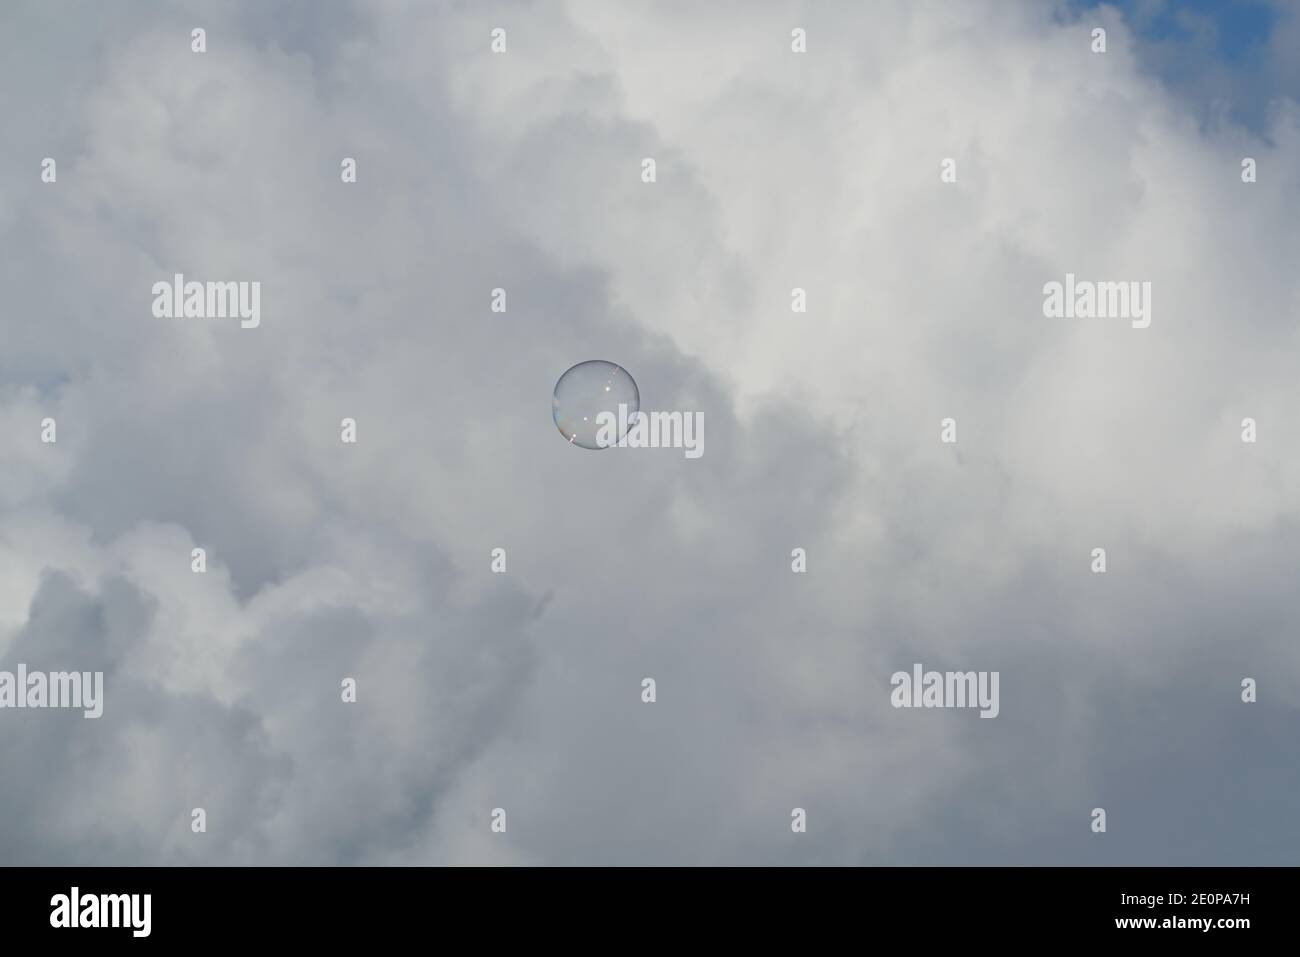 Viareggio - 10/202/2020: Seifenblase am Himmel mit Wolken Stockfoto